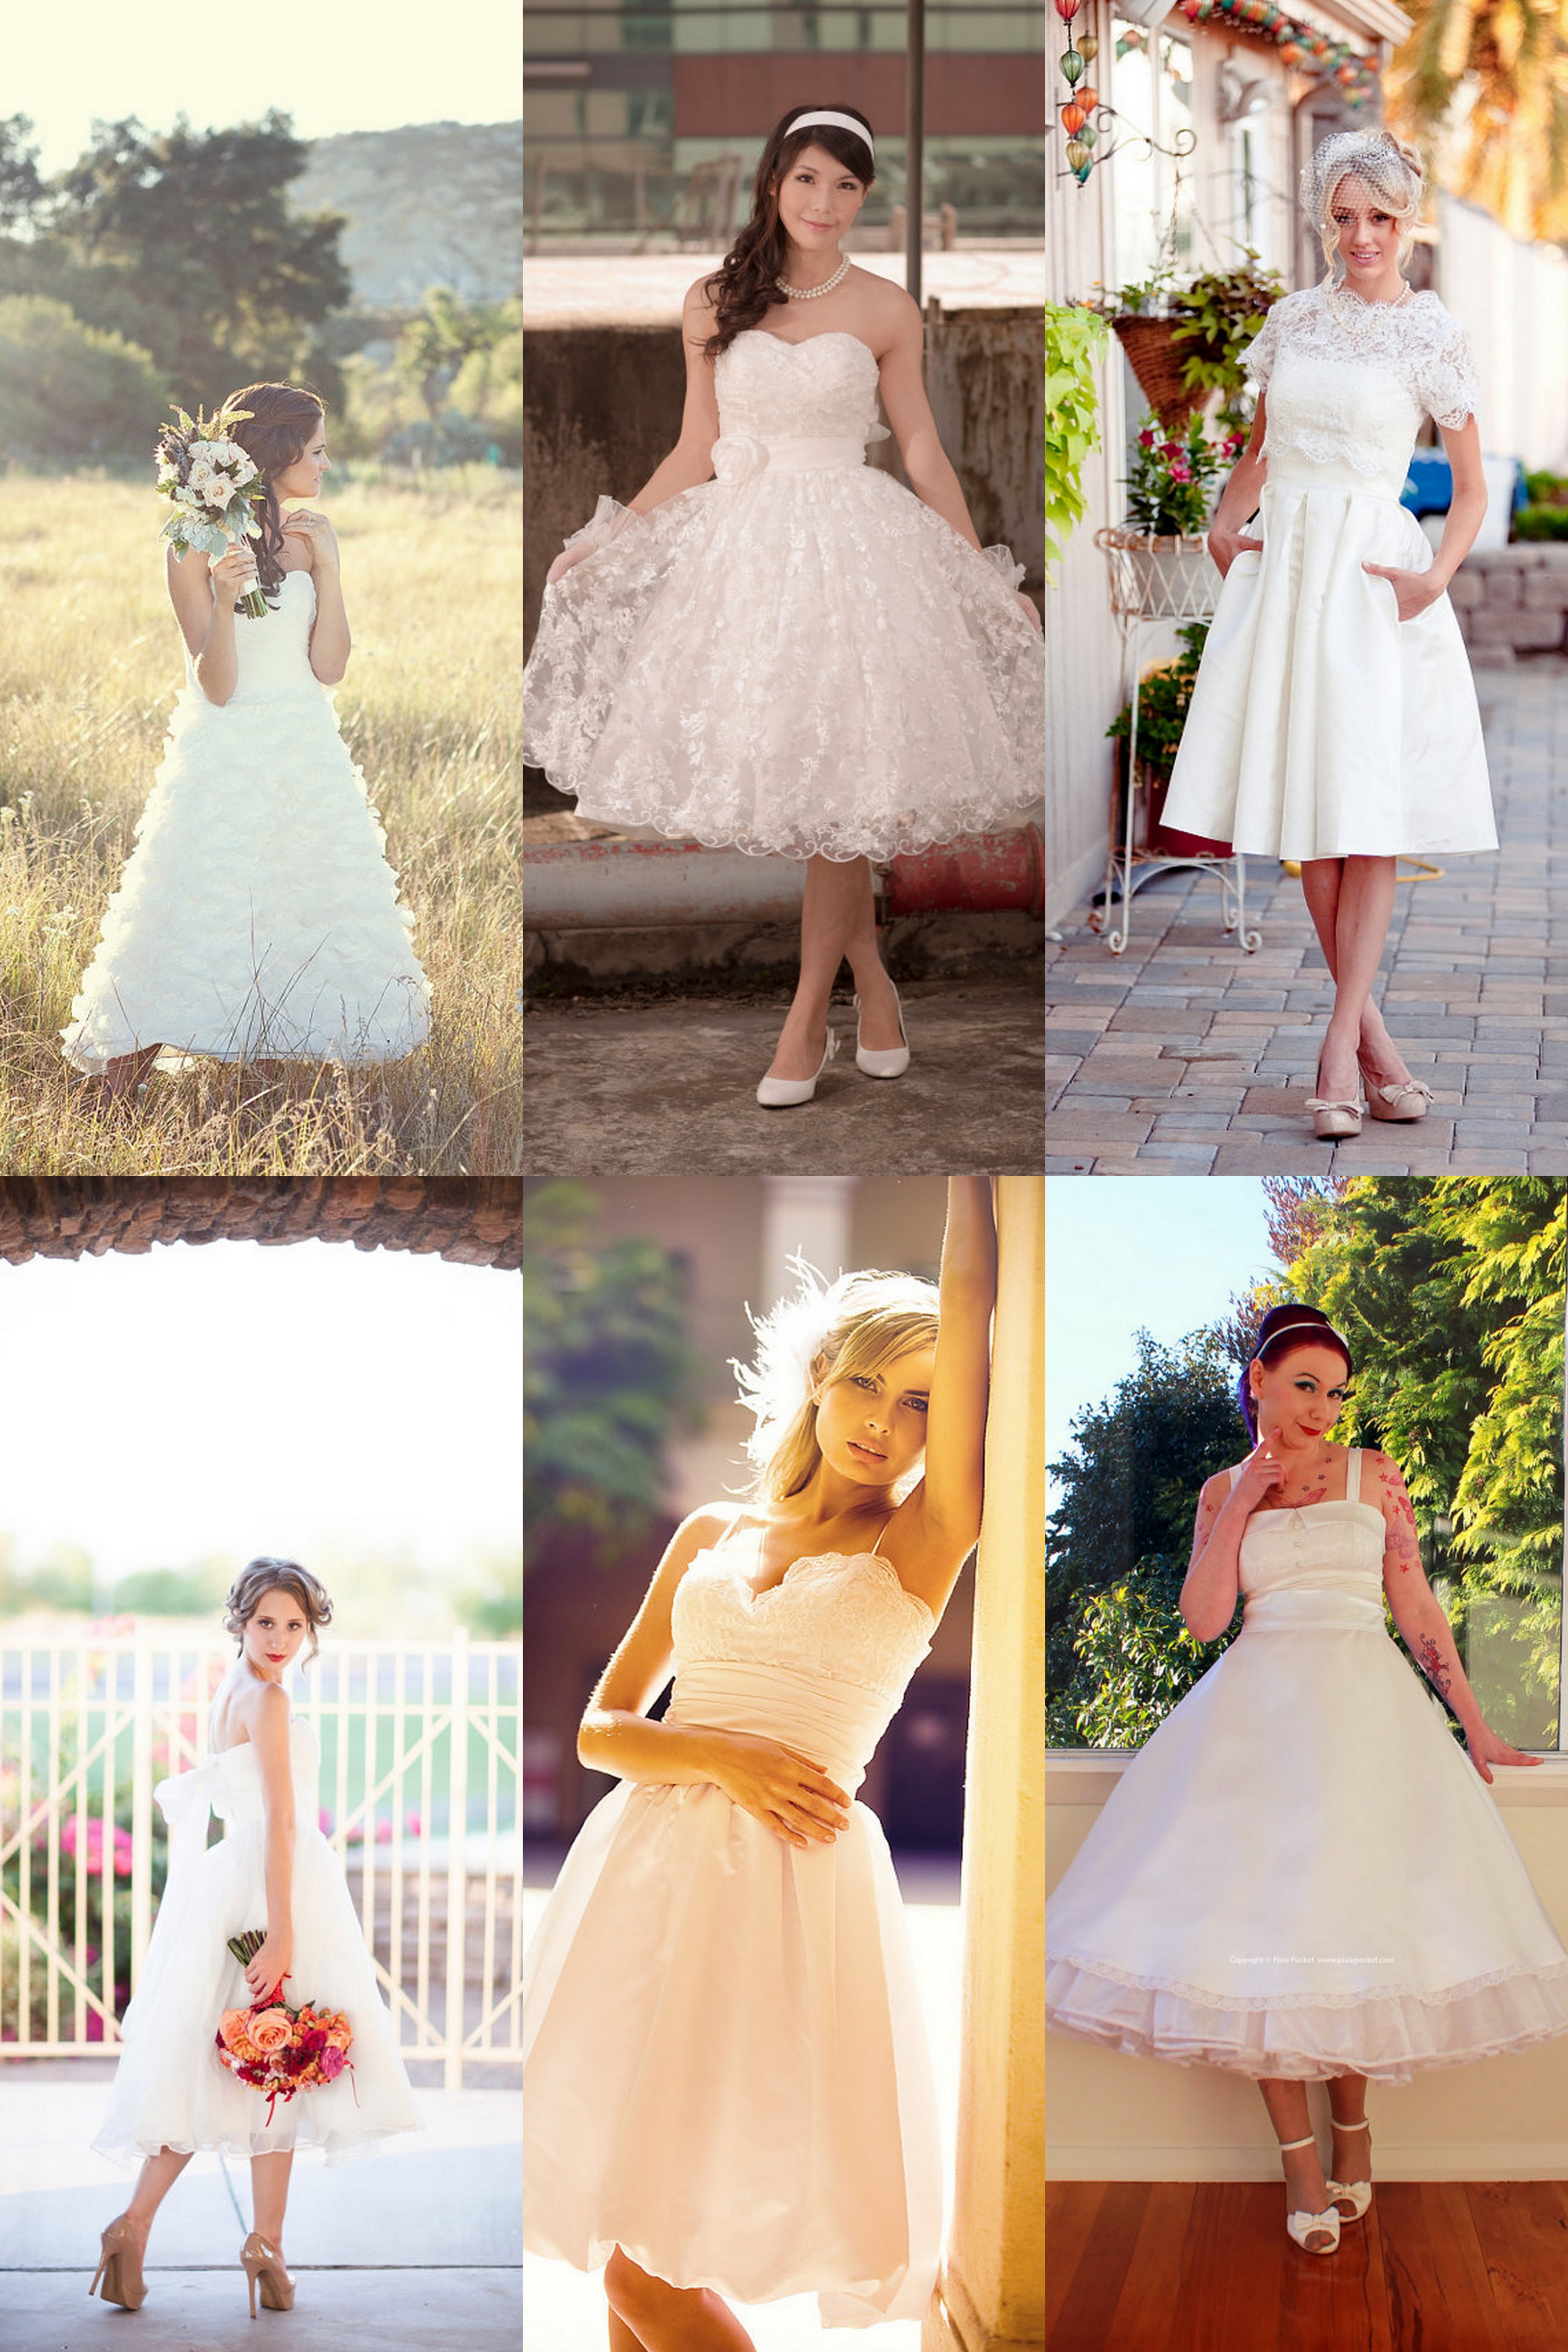 Tea Length Wedding Dresses   WeddingDates.co.uk Blog